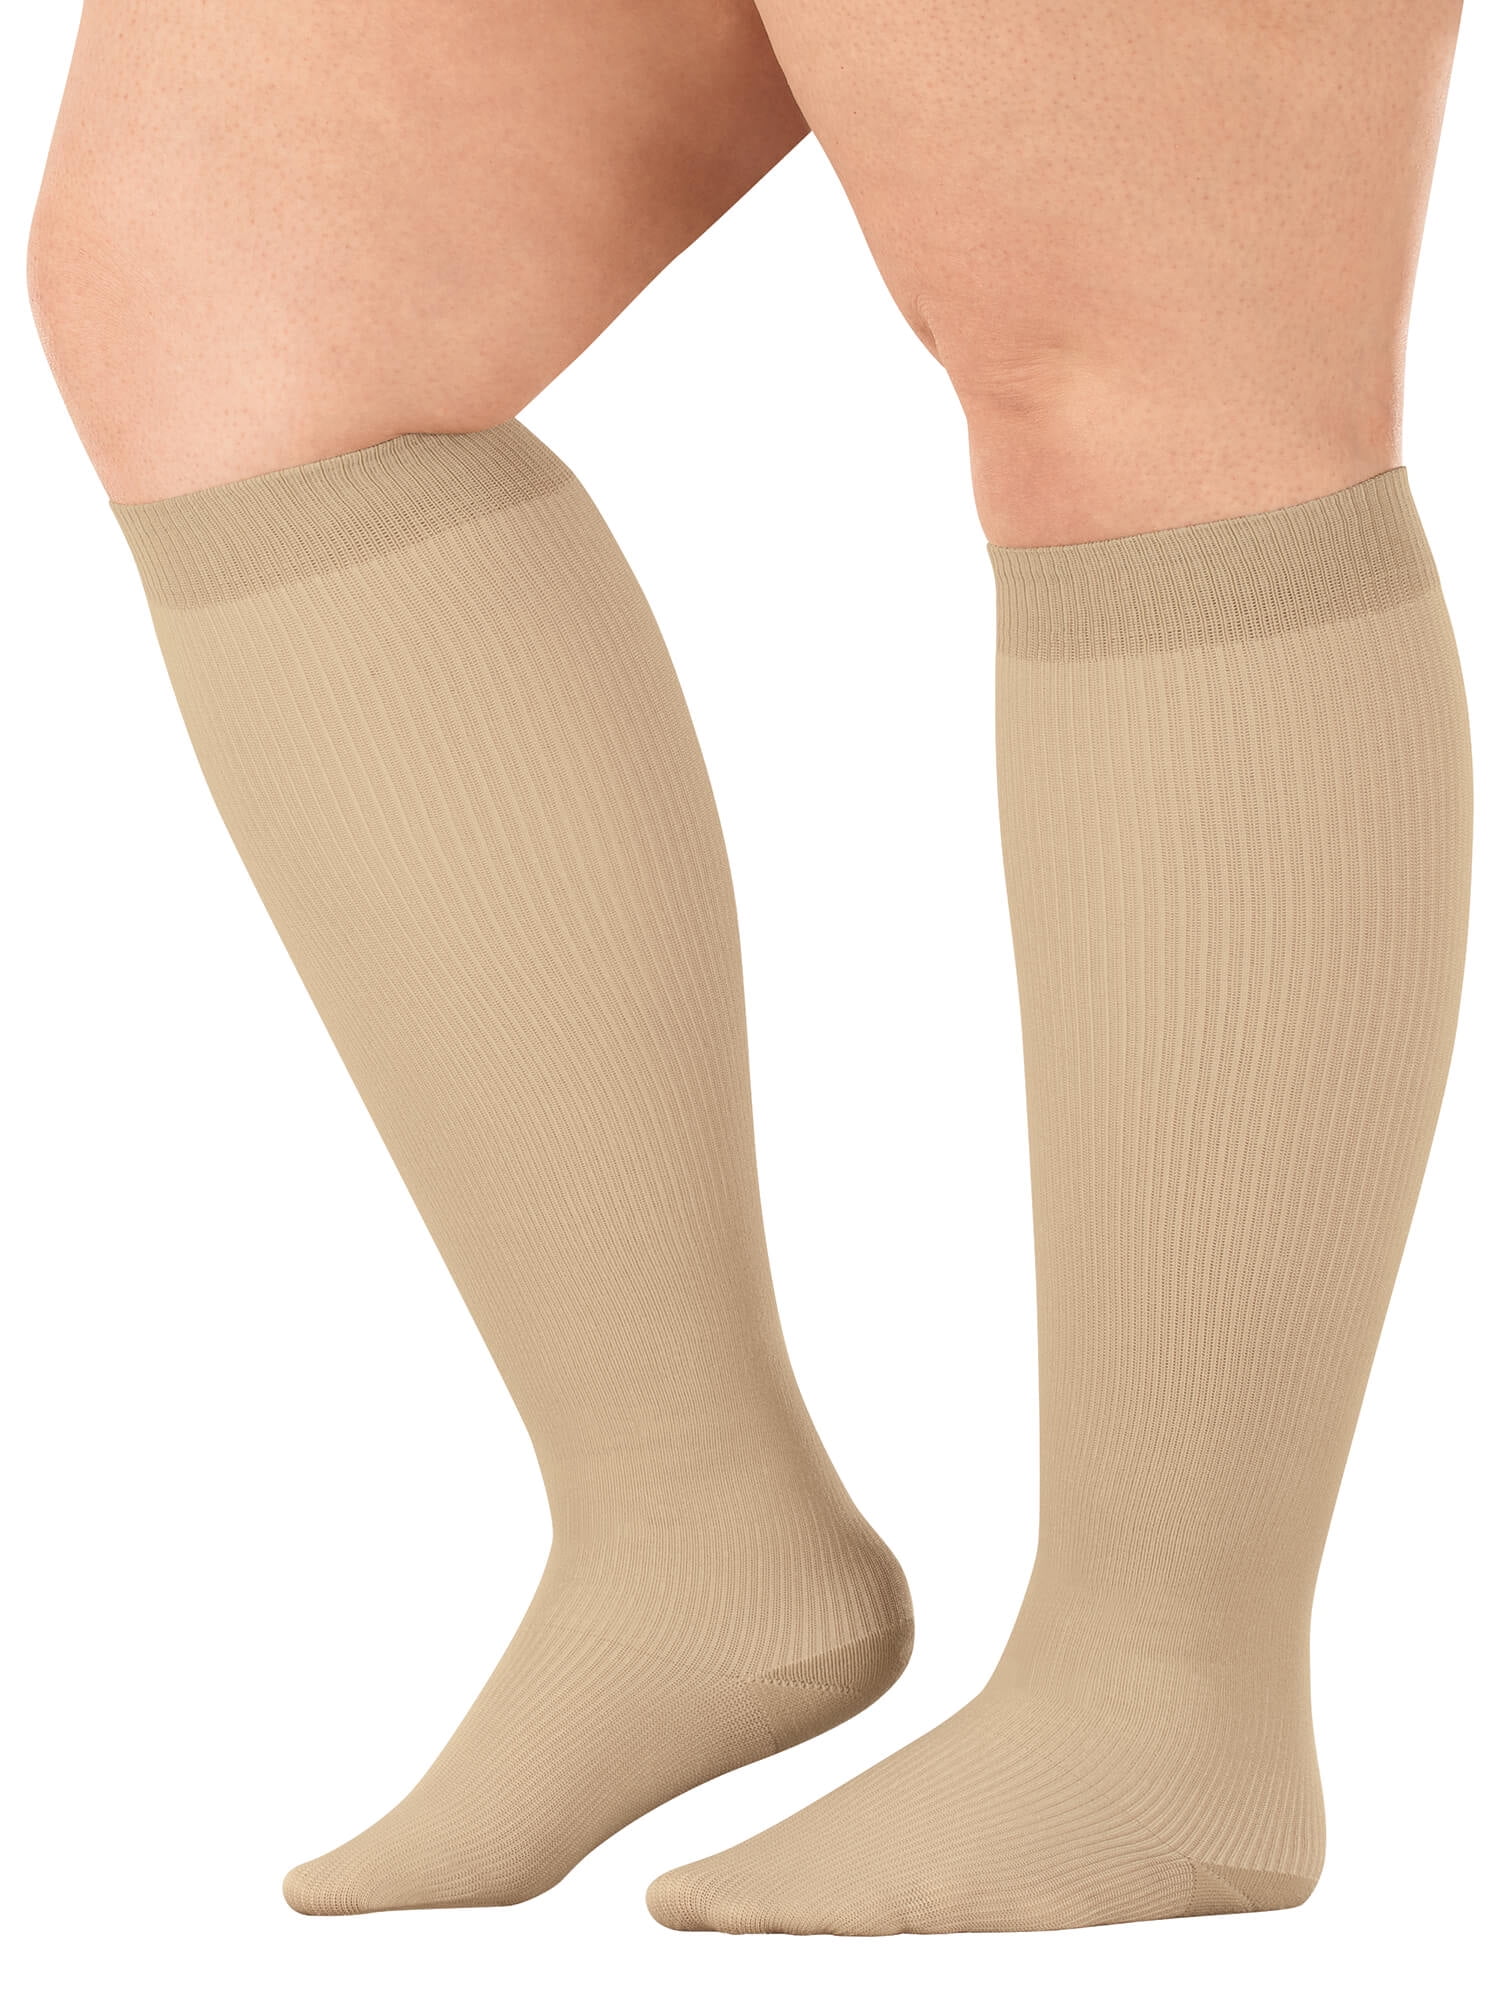 Silver StepsTM Wide Calf Compression Socks, 15-20 mmHg, Tan, Medium